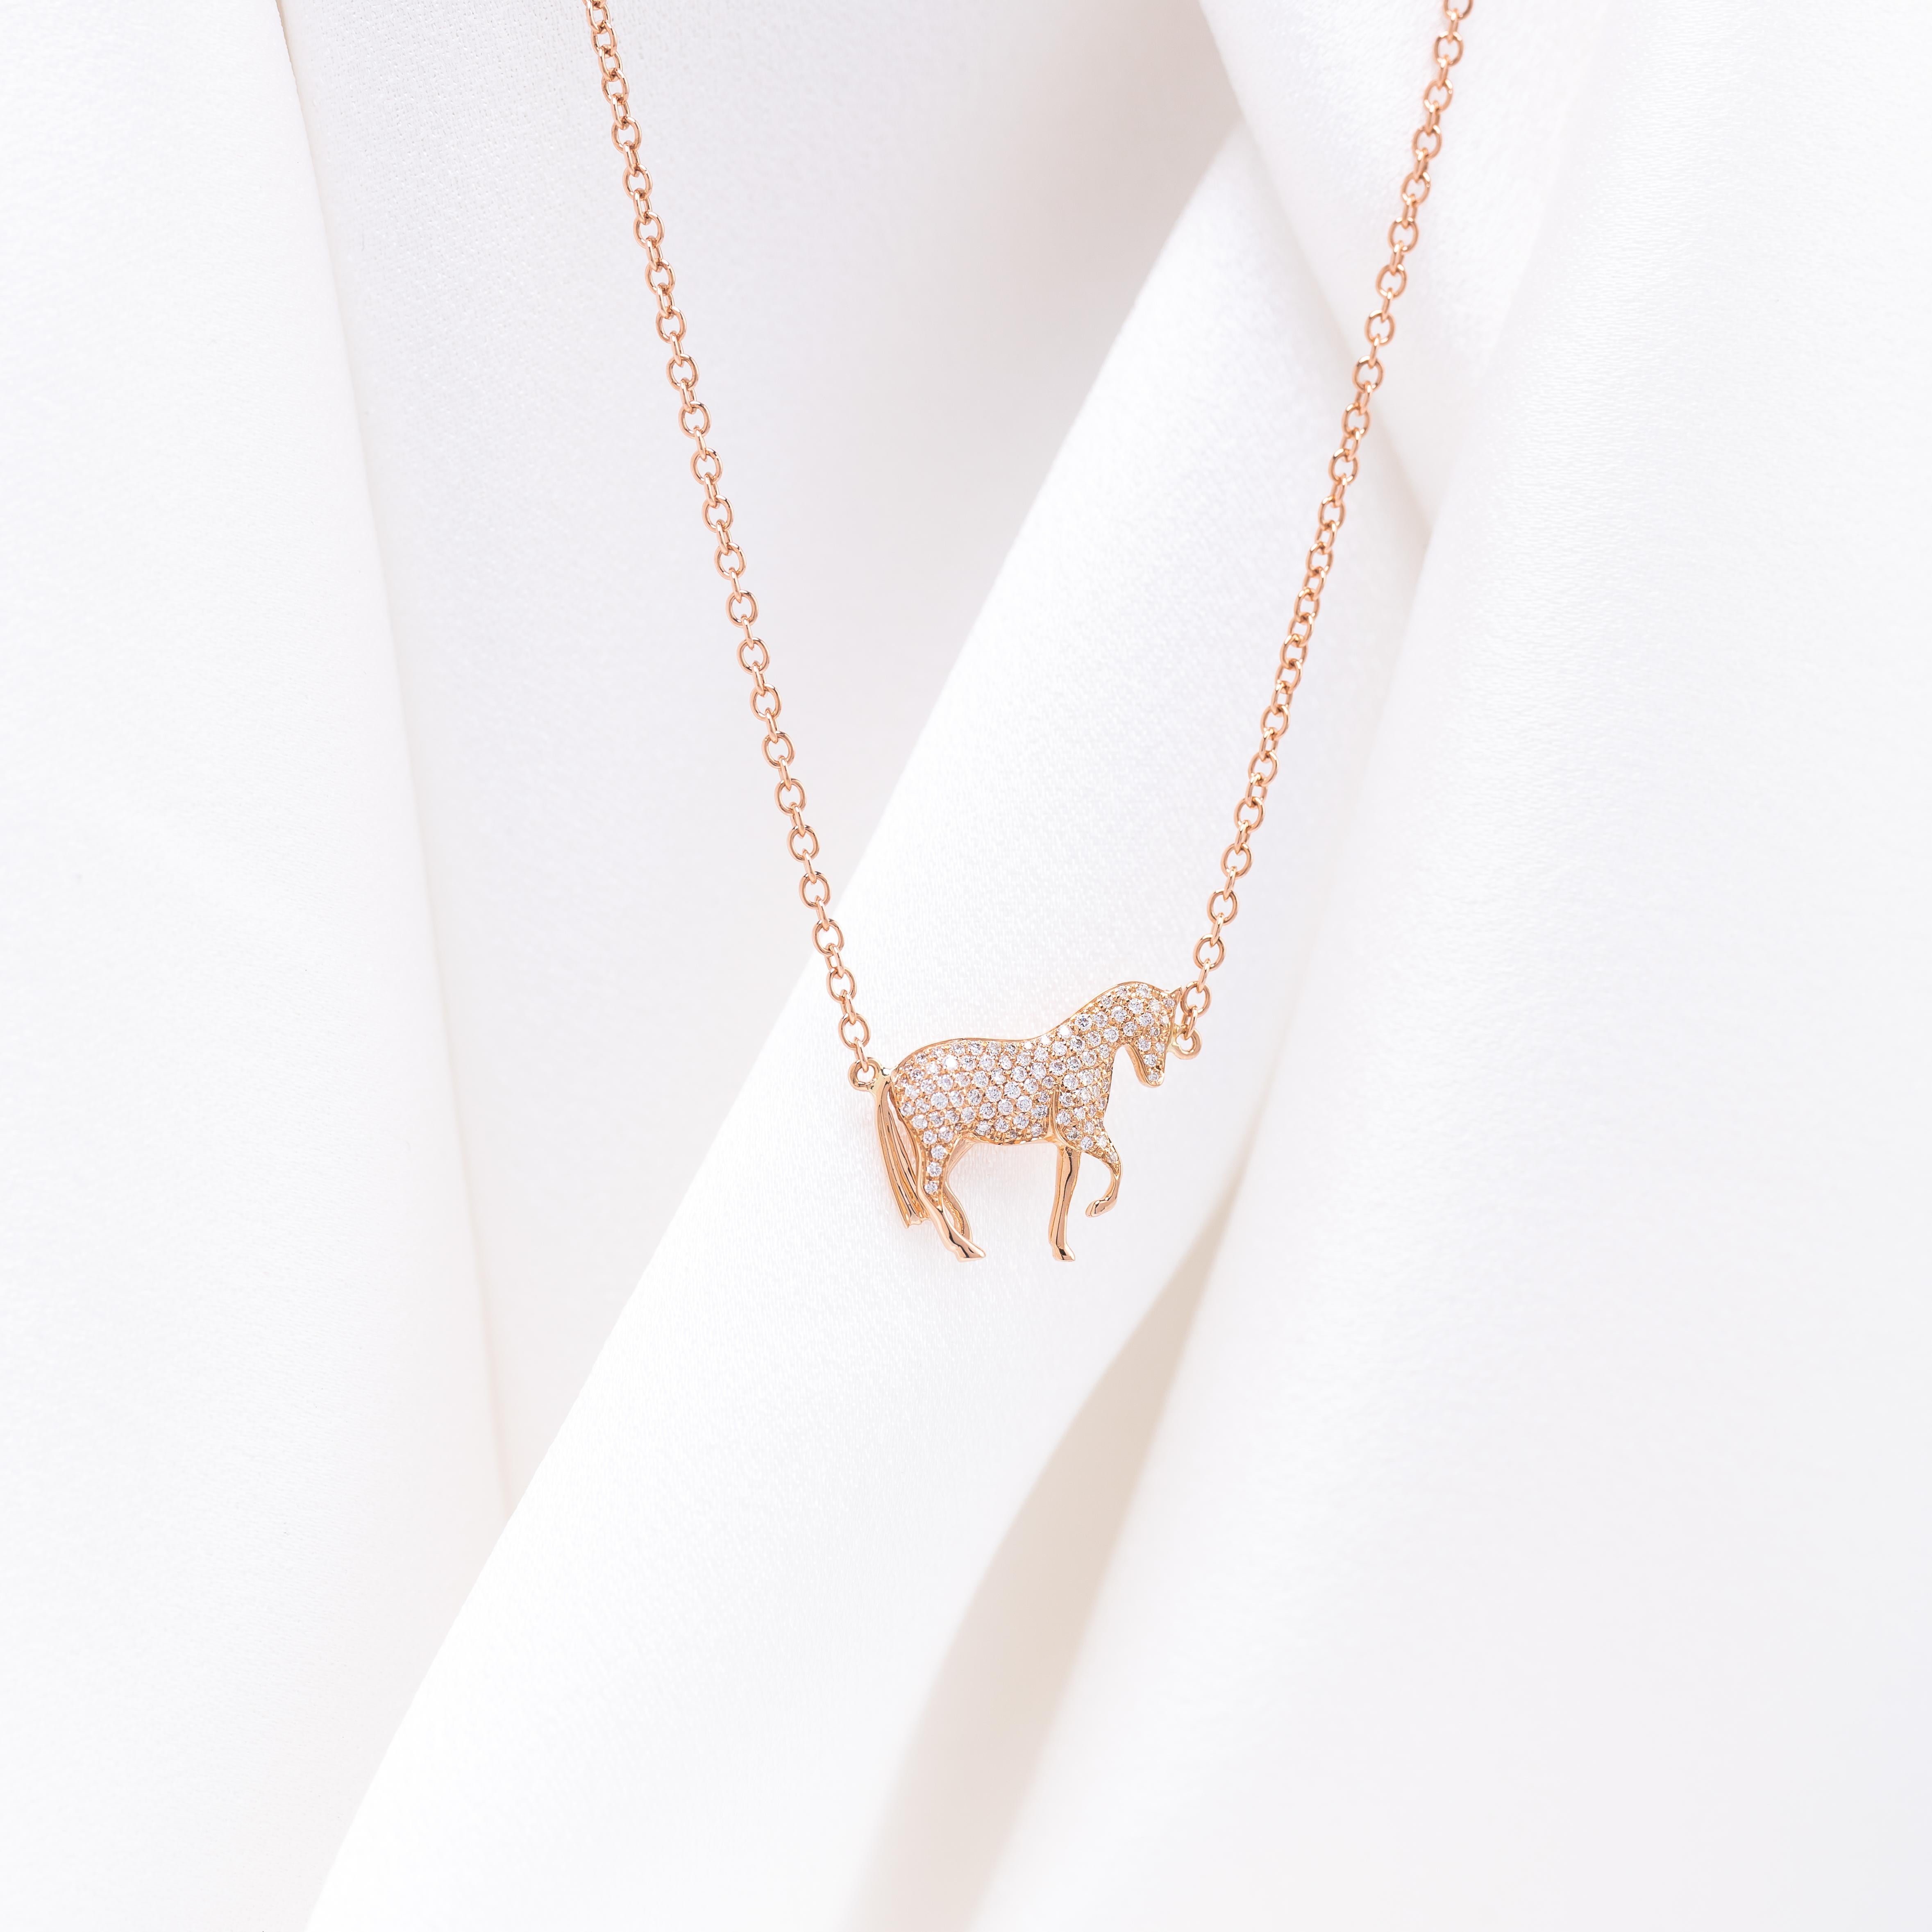 Women's Handmade 18kt Gold Diamonds Horse Pendant Necklace by Ubaldi Equestrian Jewelry